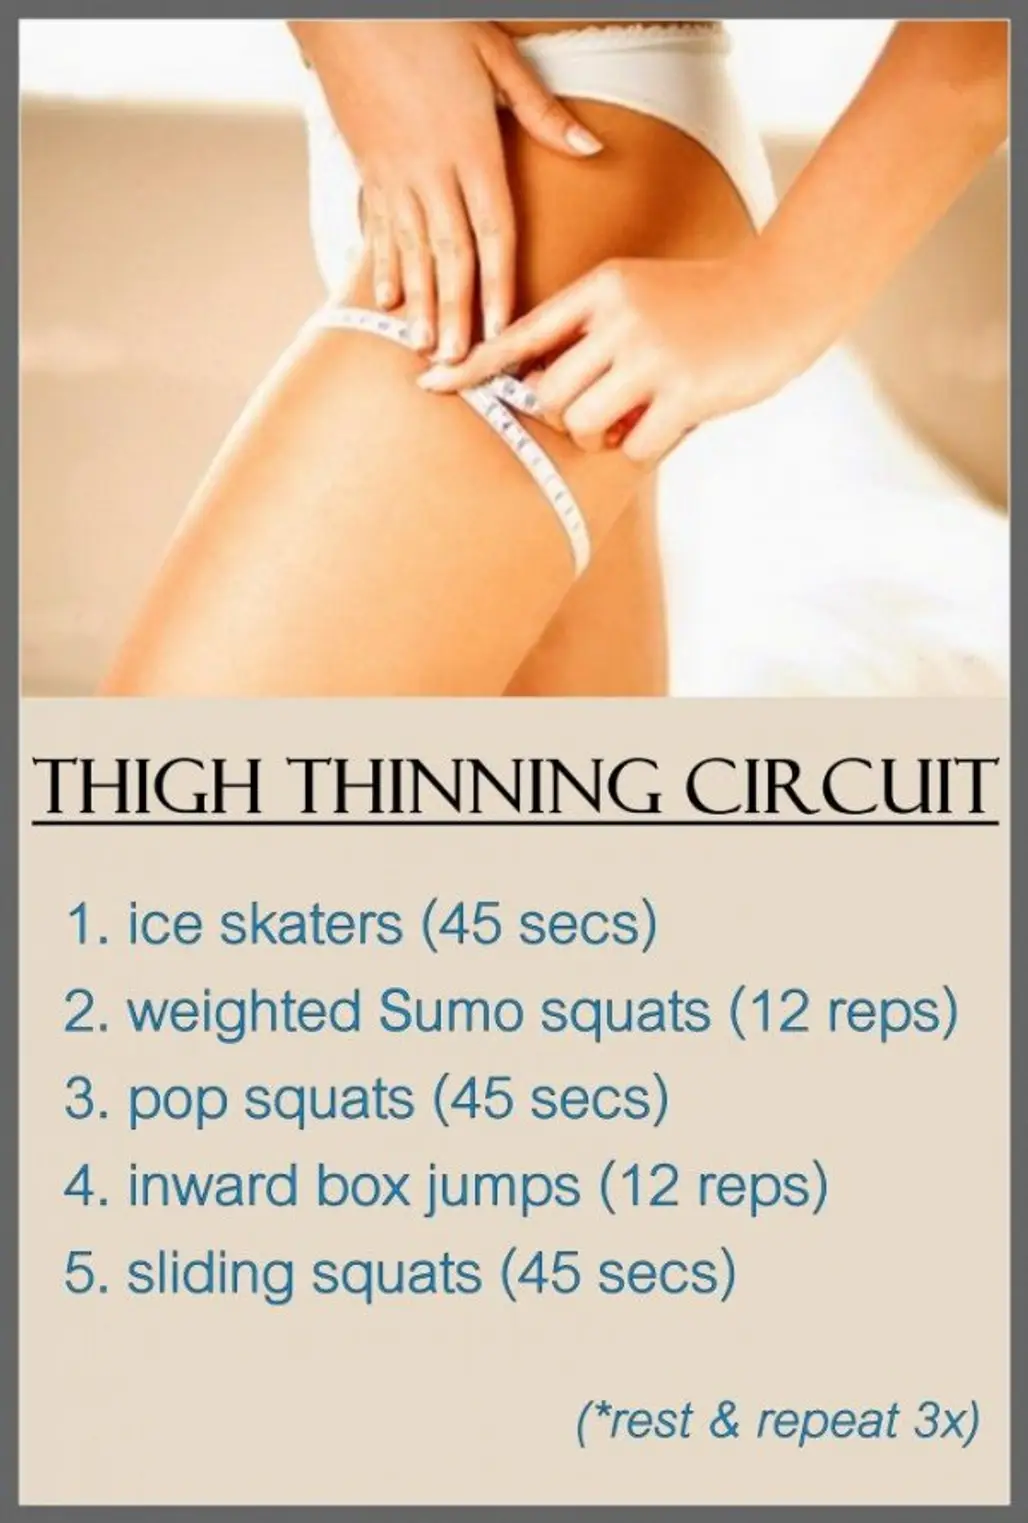 Thigh-Thinning Circuit